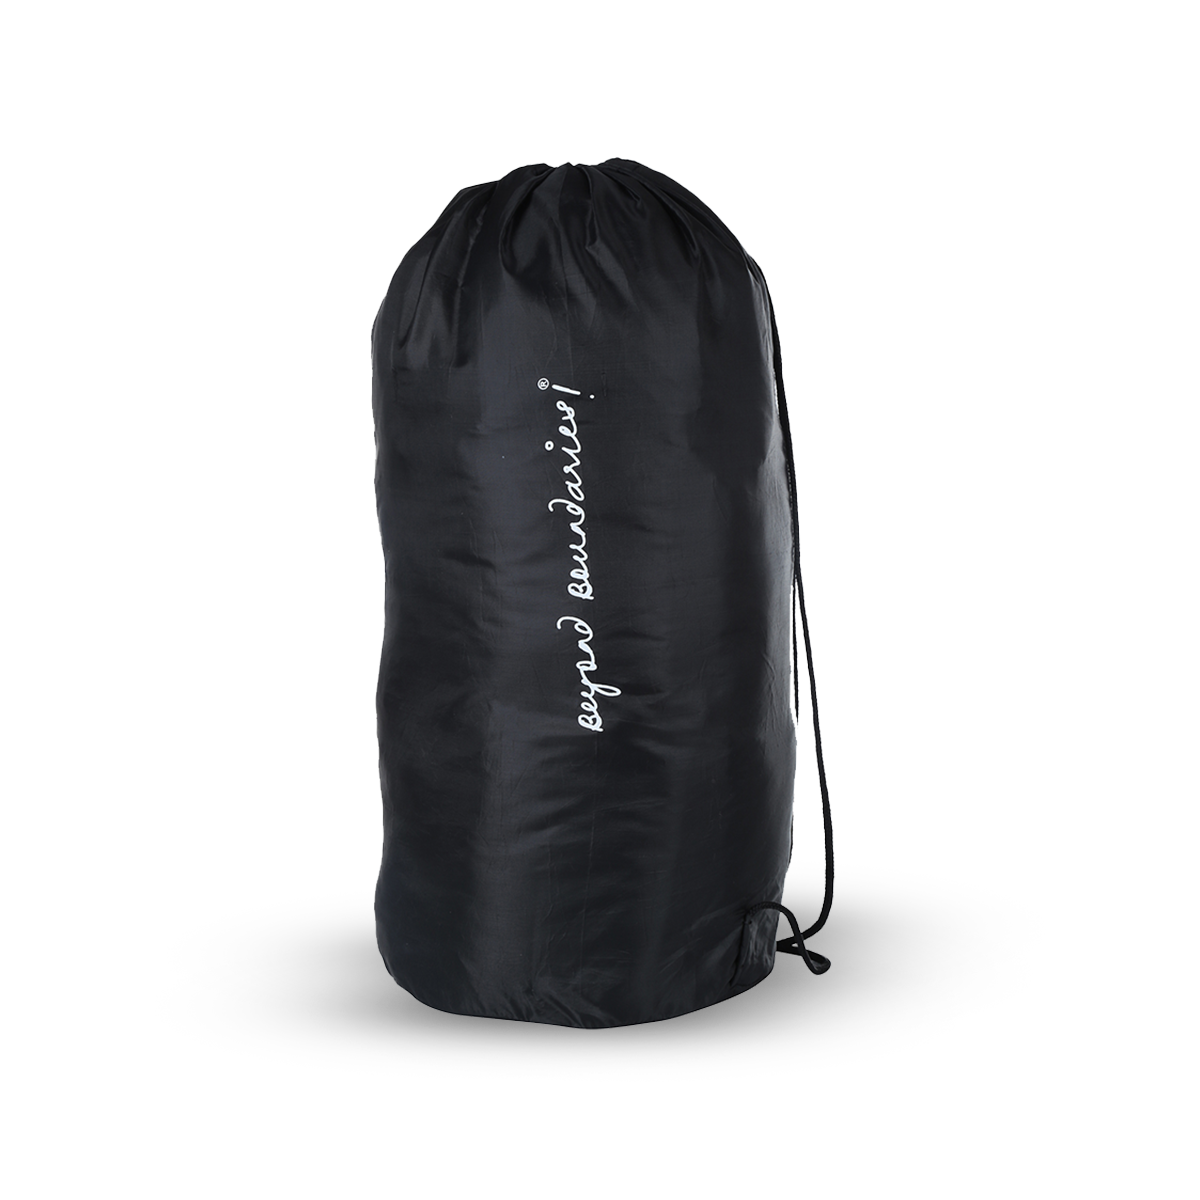 Packable Round Bag Size Large Black